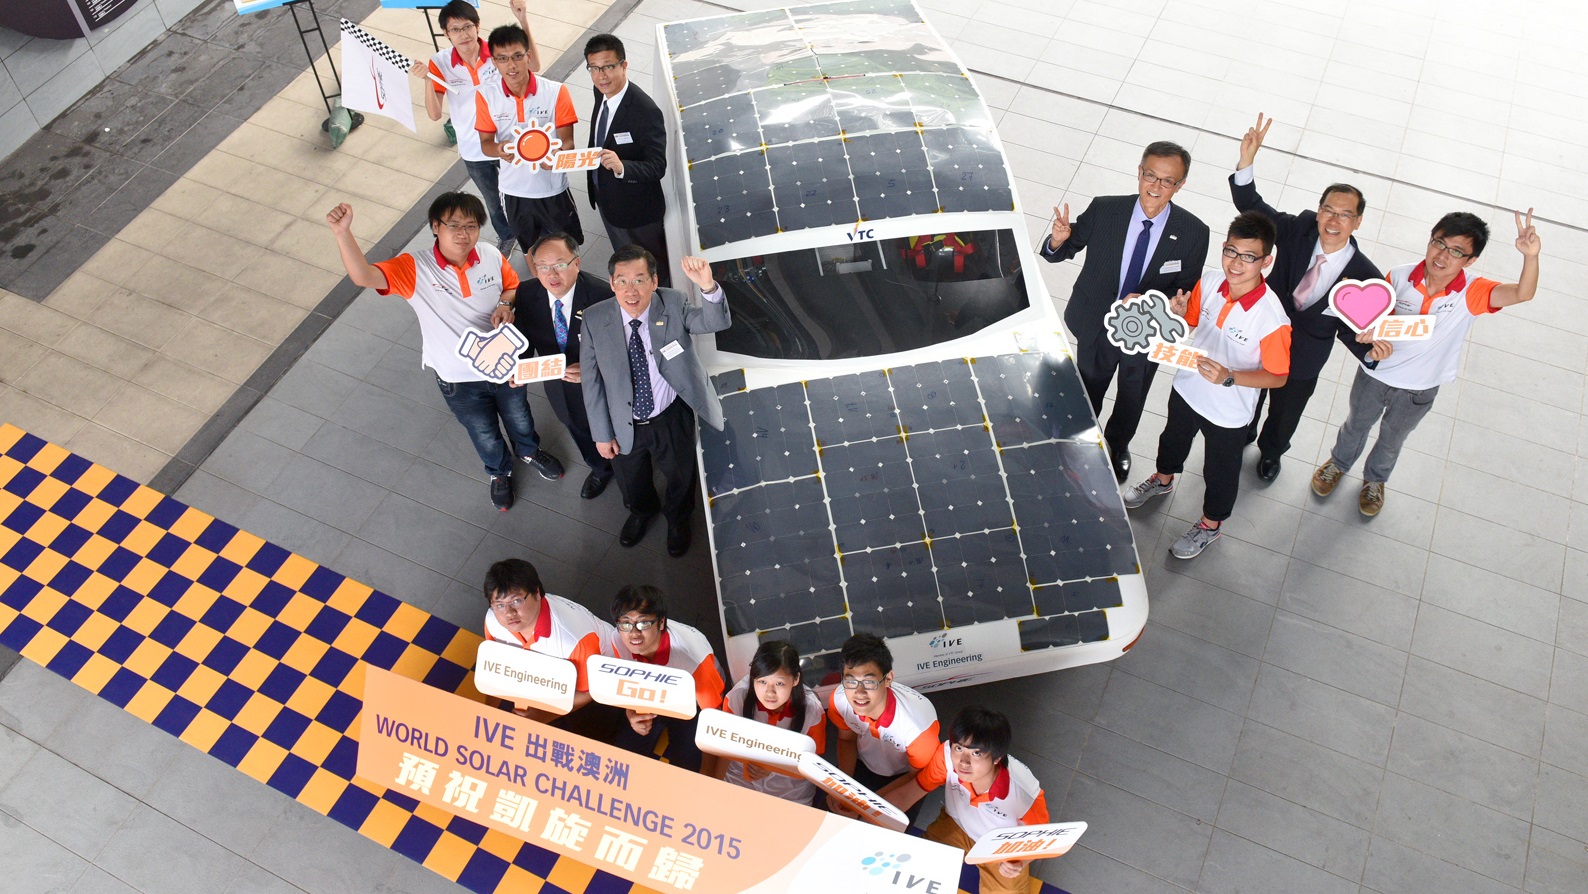 VTC Engineering Discipline unveils SOPHIE IV in 
Run-Up to World Solar Challenge 2015